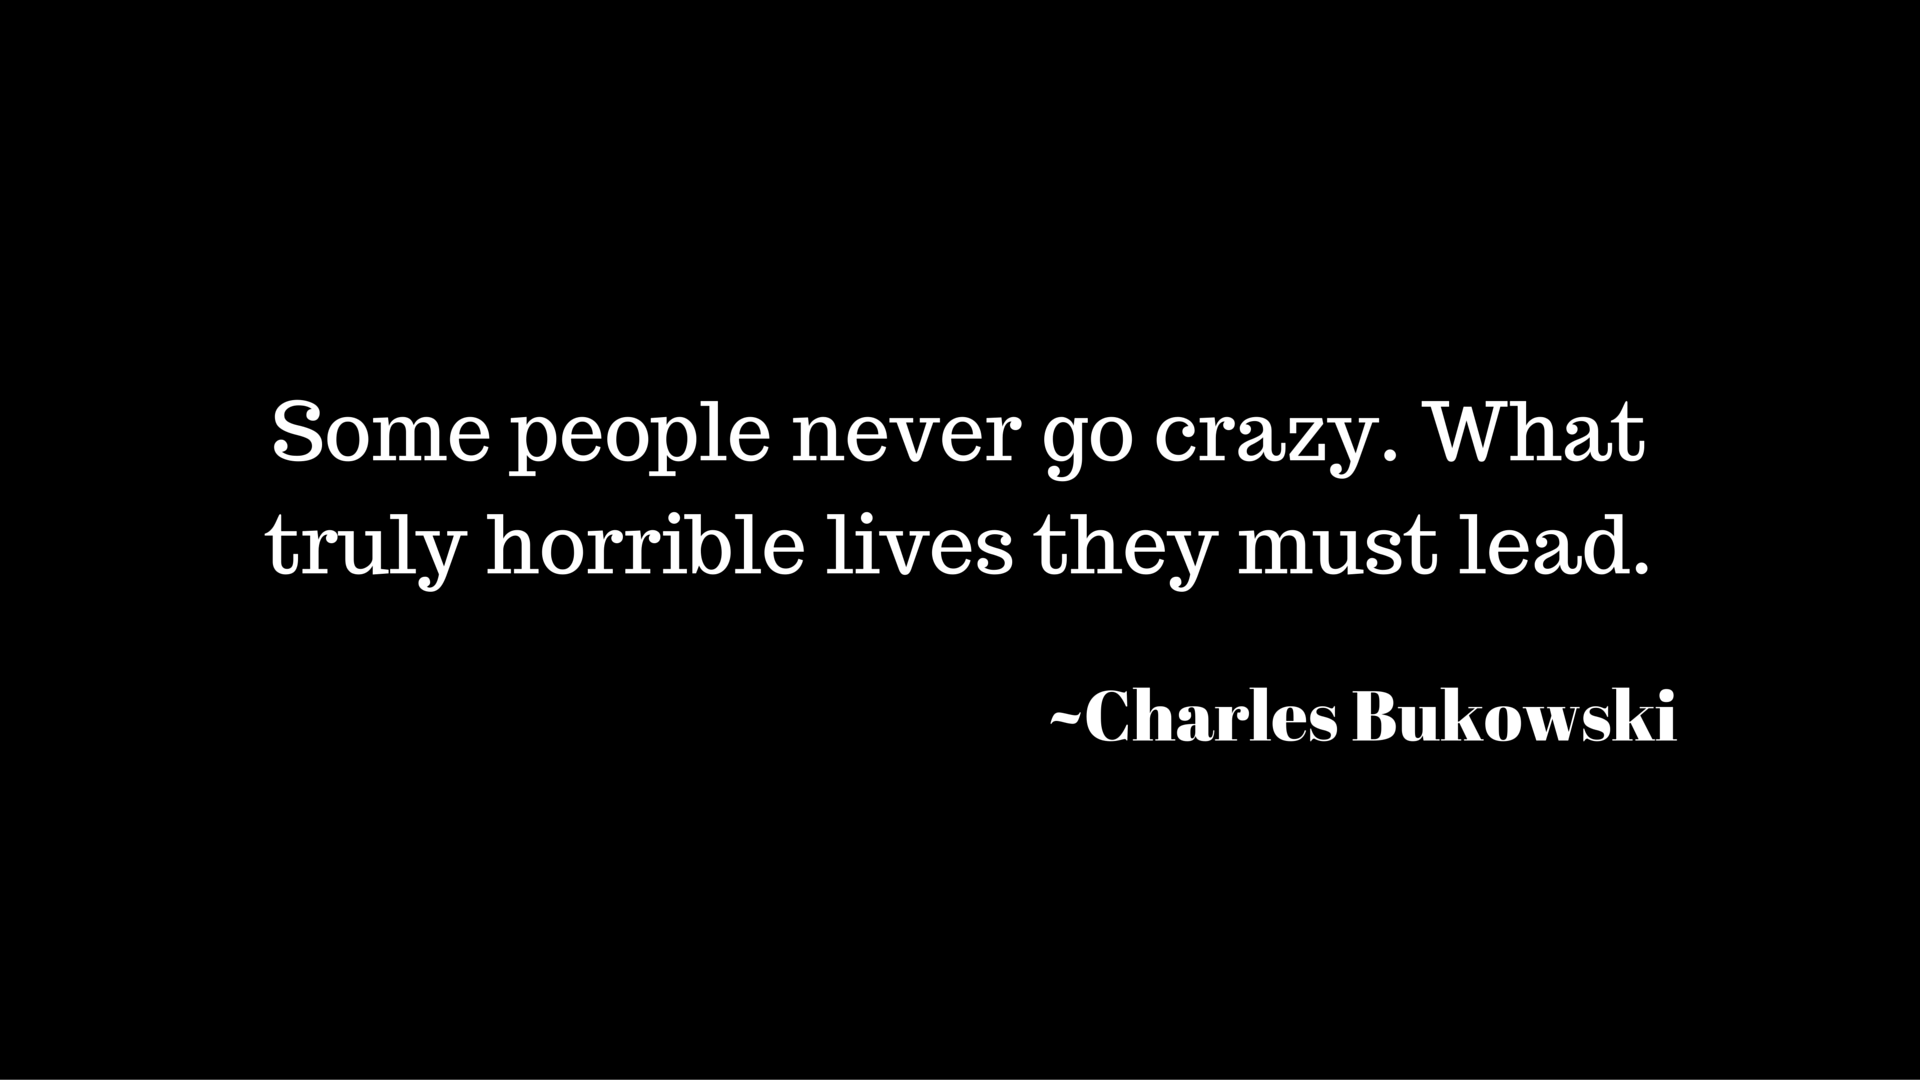 Charles Bukowski Quote Typography 1920x1080